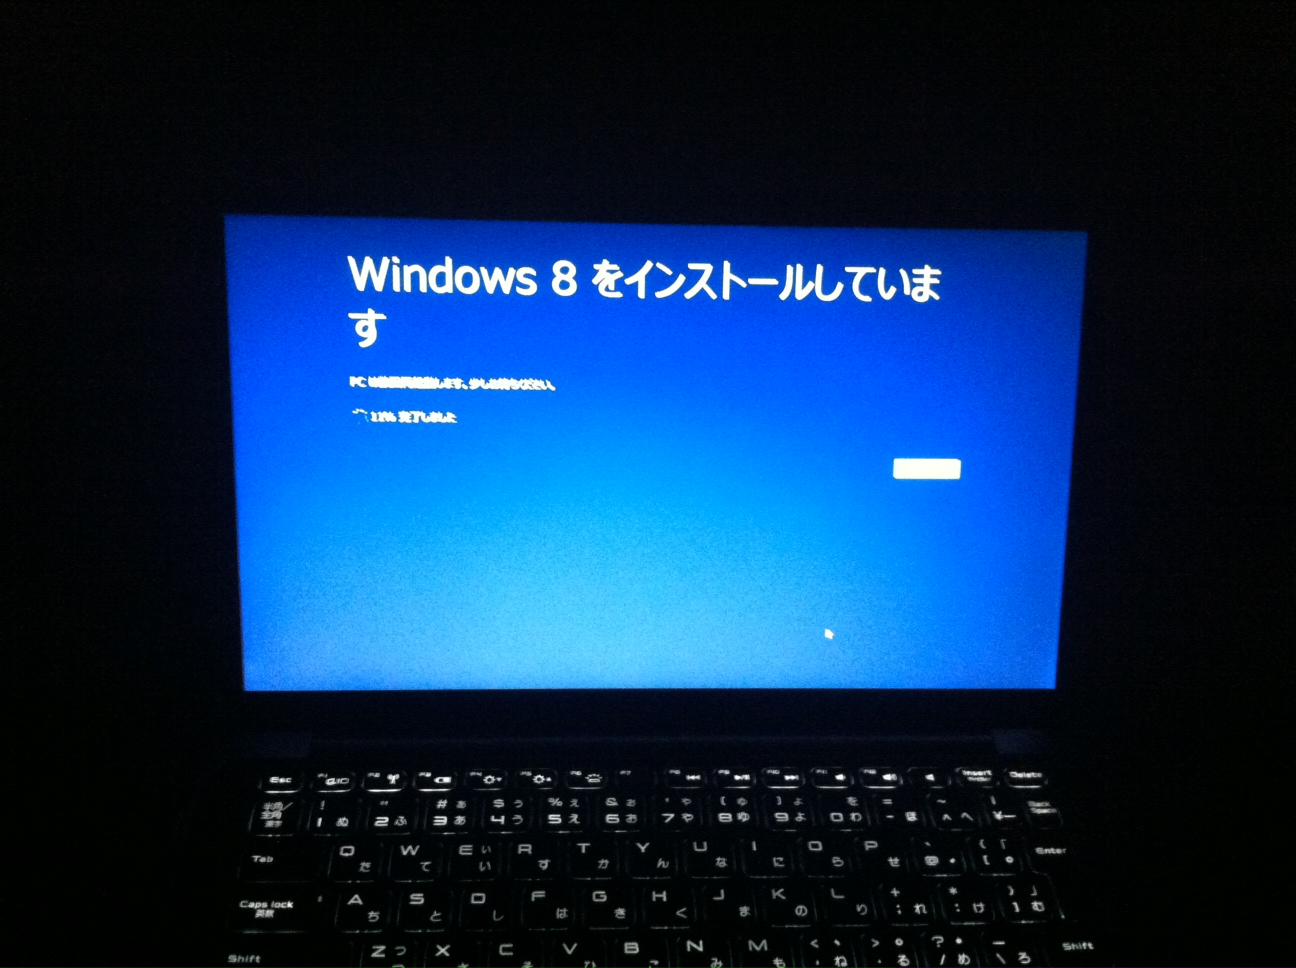 Japanese Windows 8 Japan All Over Travel Guide